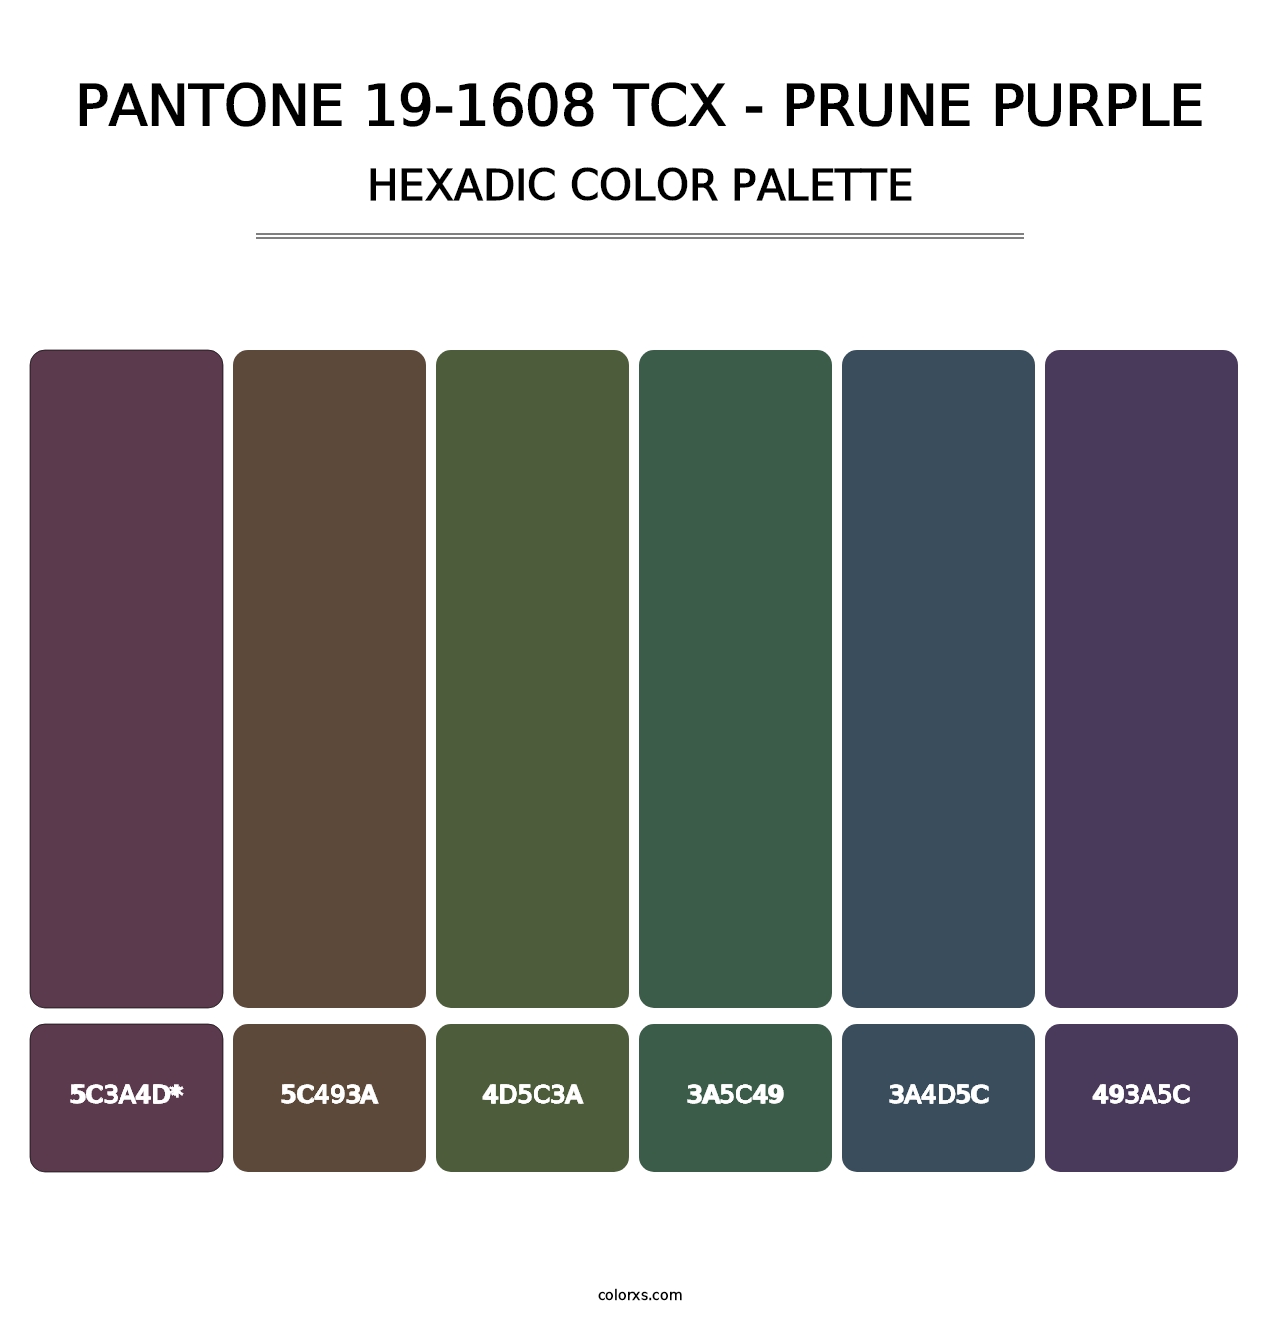 PANTONE 19-1608 TCX - Prune Purple - Hexadic Color Palette